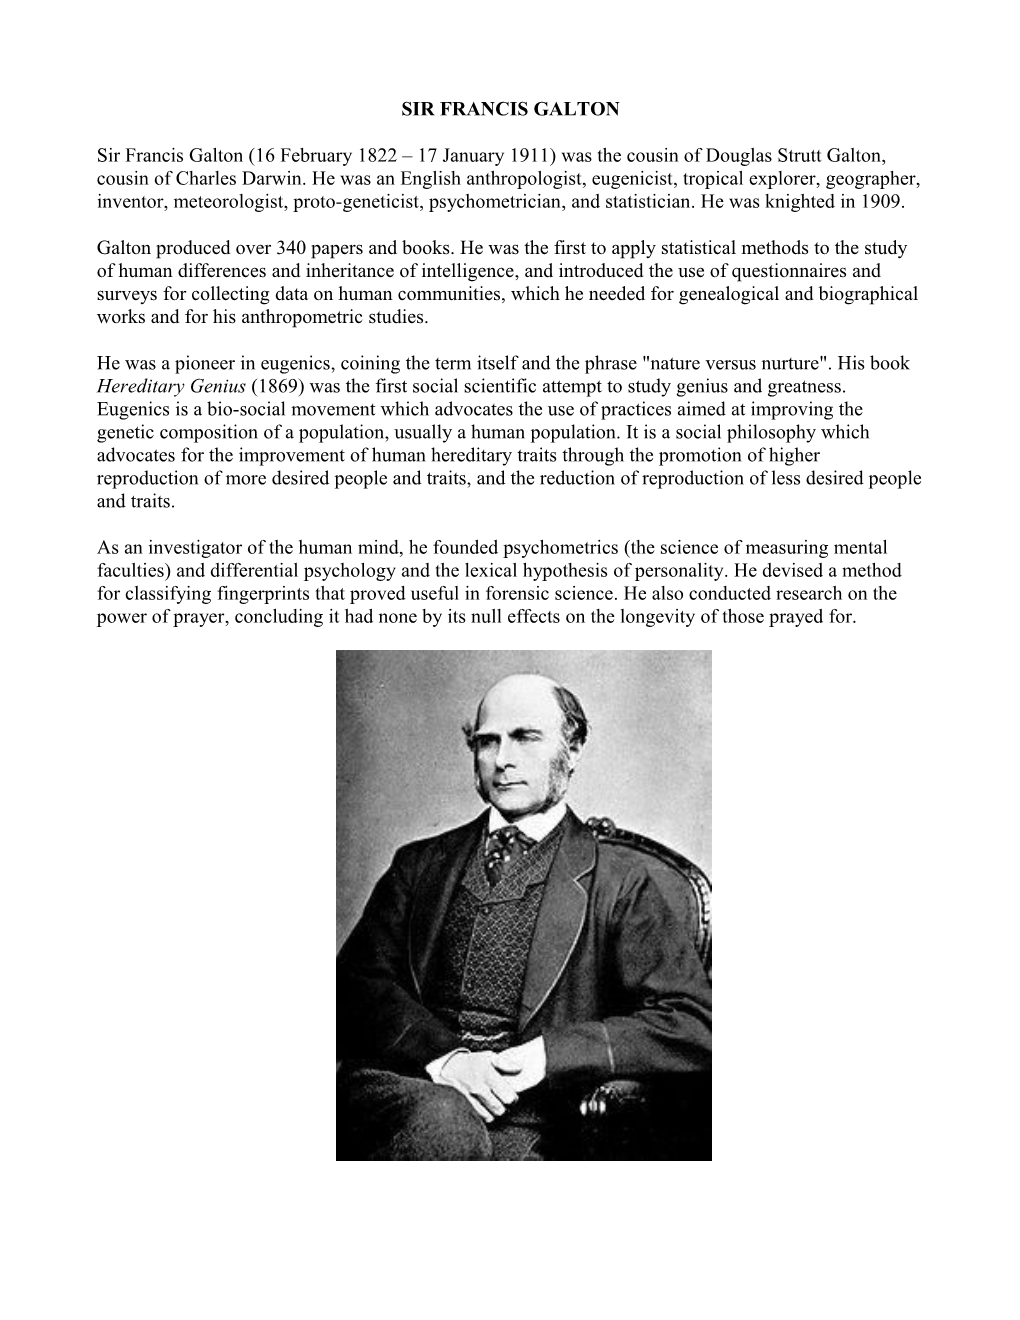 Herbert Spencer (27 April 1820 8 December 1903) Was an English Philosopher, Biologist